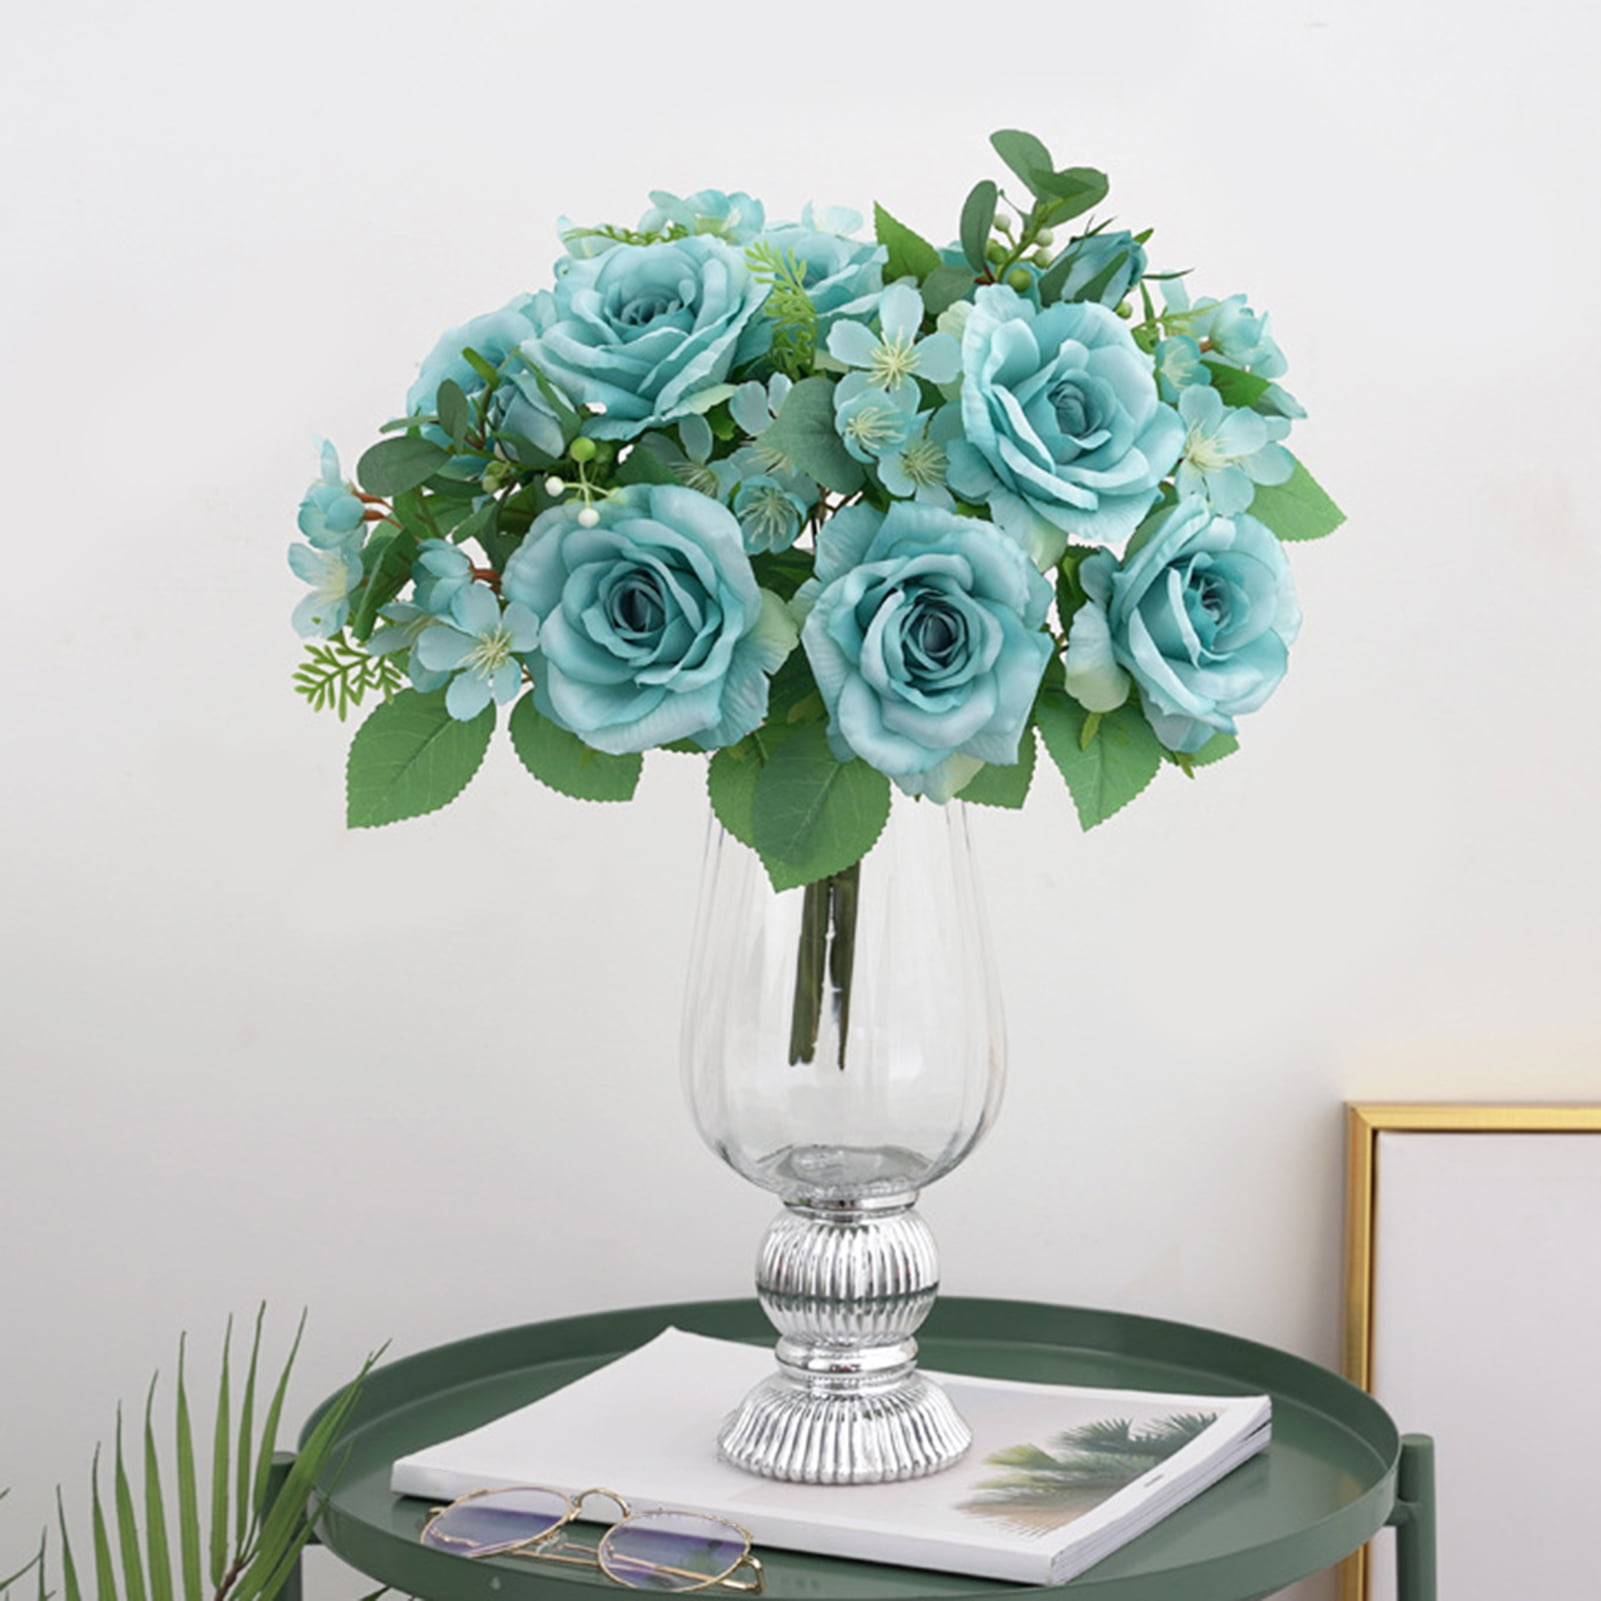 Details about   Artificial Flower Arrangement/Natural/Photo prop/Interior Deco/Gifting/Wedding 